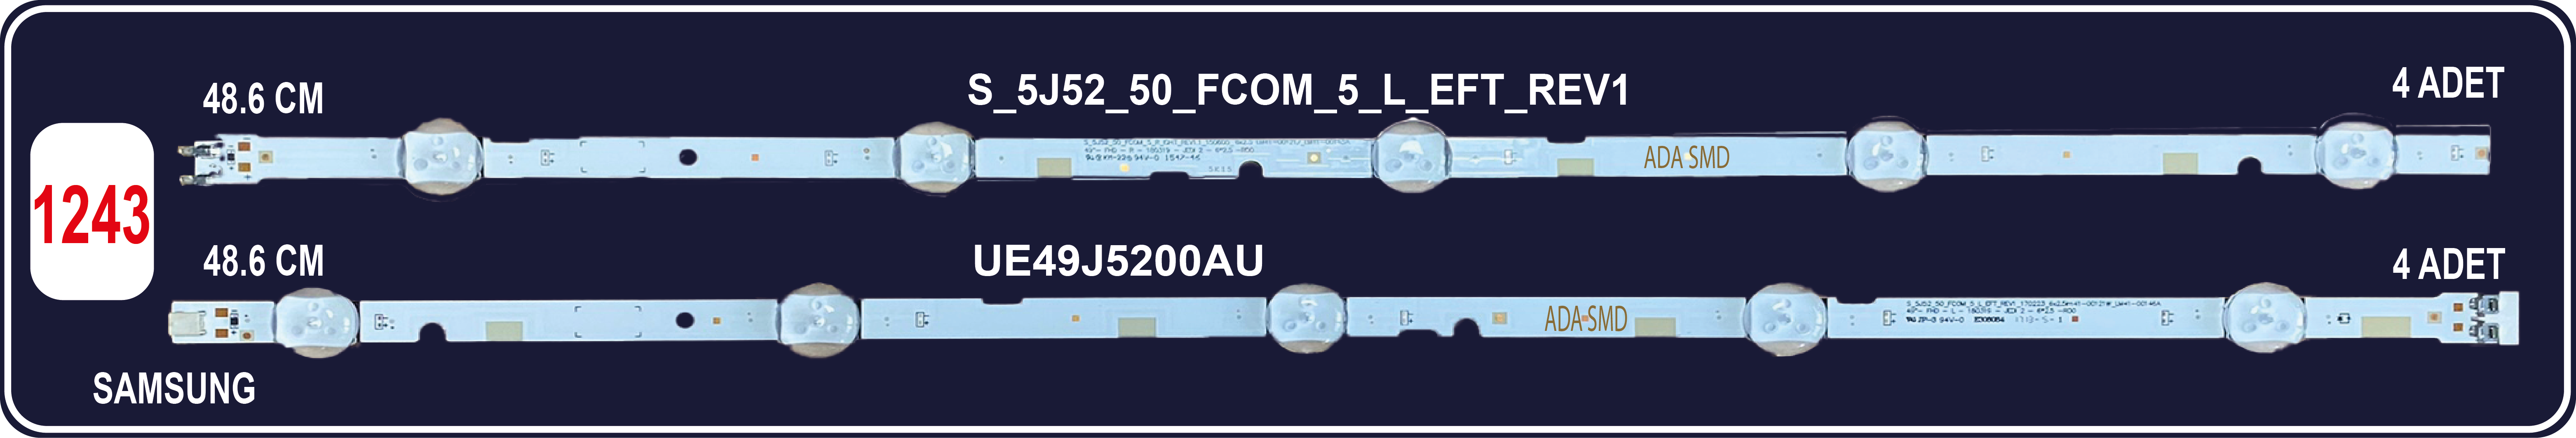 SAMSUNG UE49J5200AU - UE49N5300